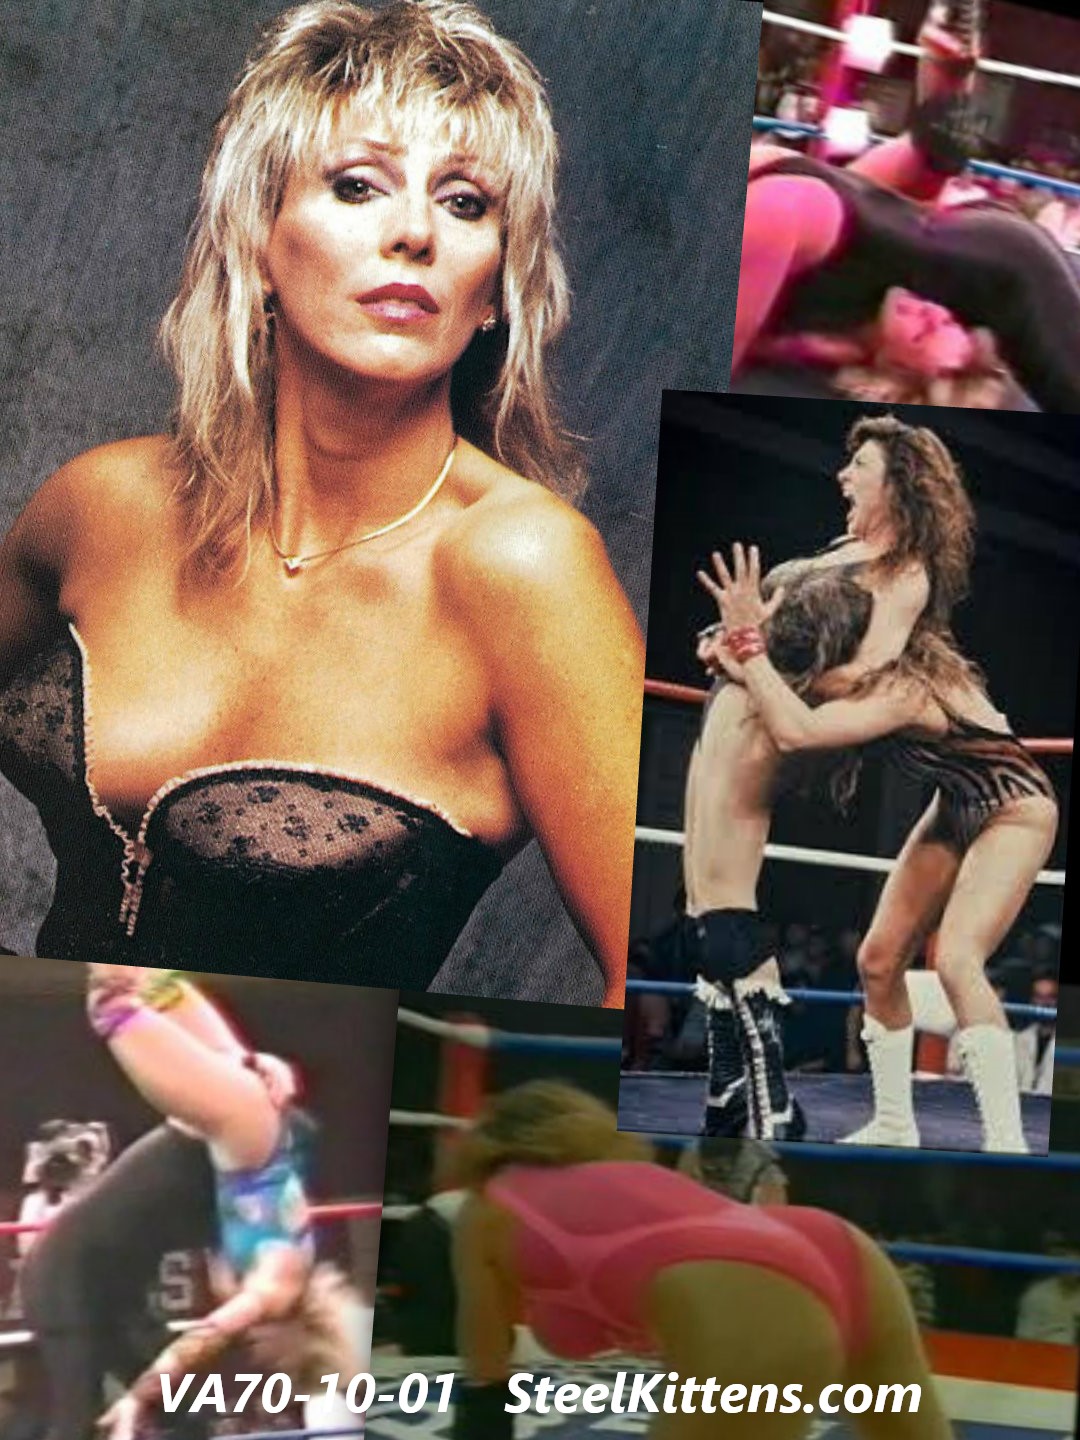 Vintage Women's Professional Wrestling VA-70-10-01 | Streaming / Download